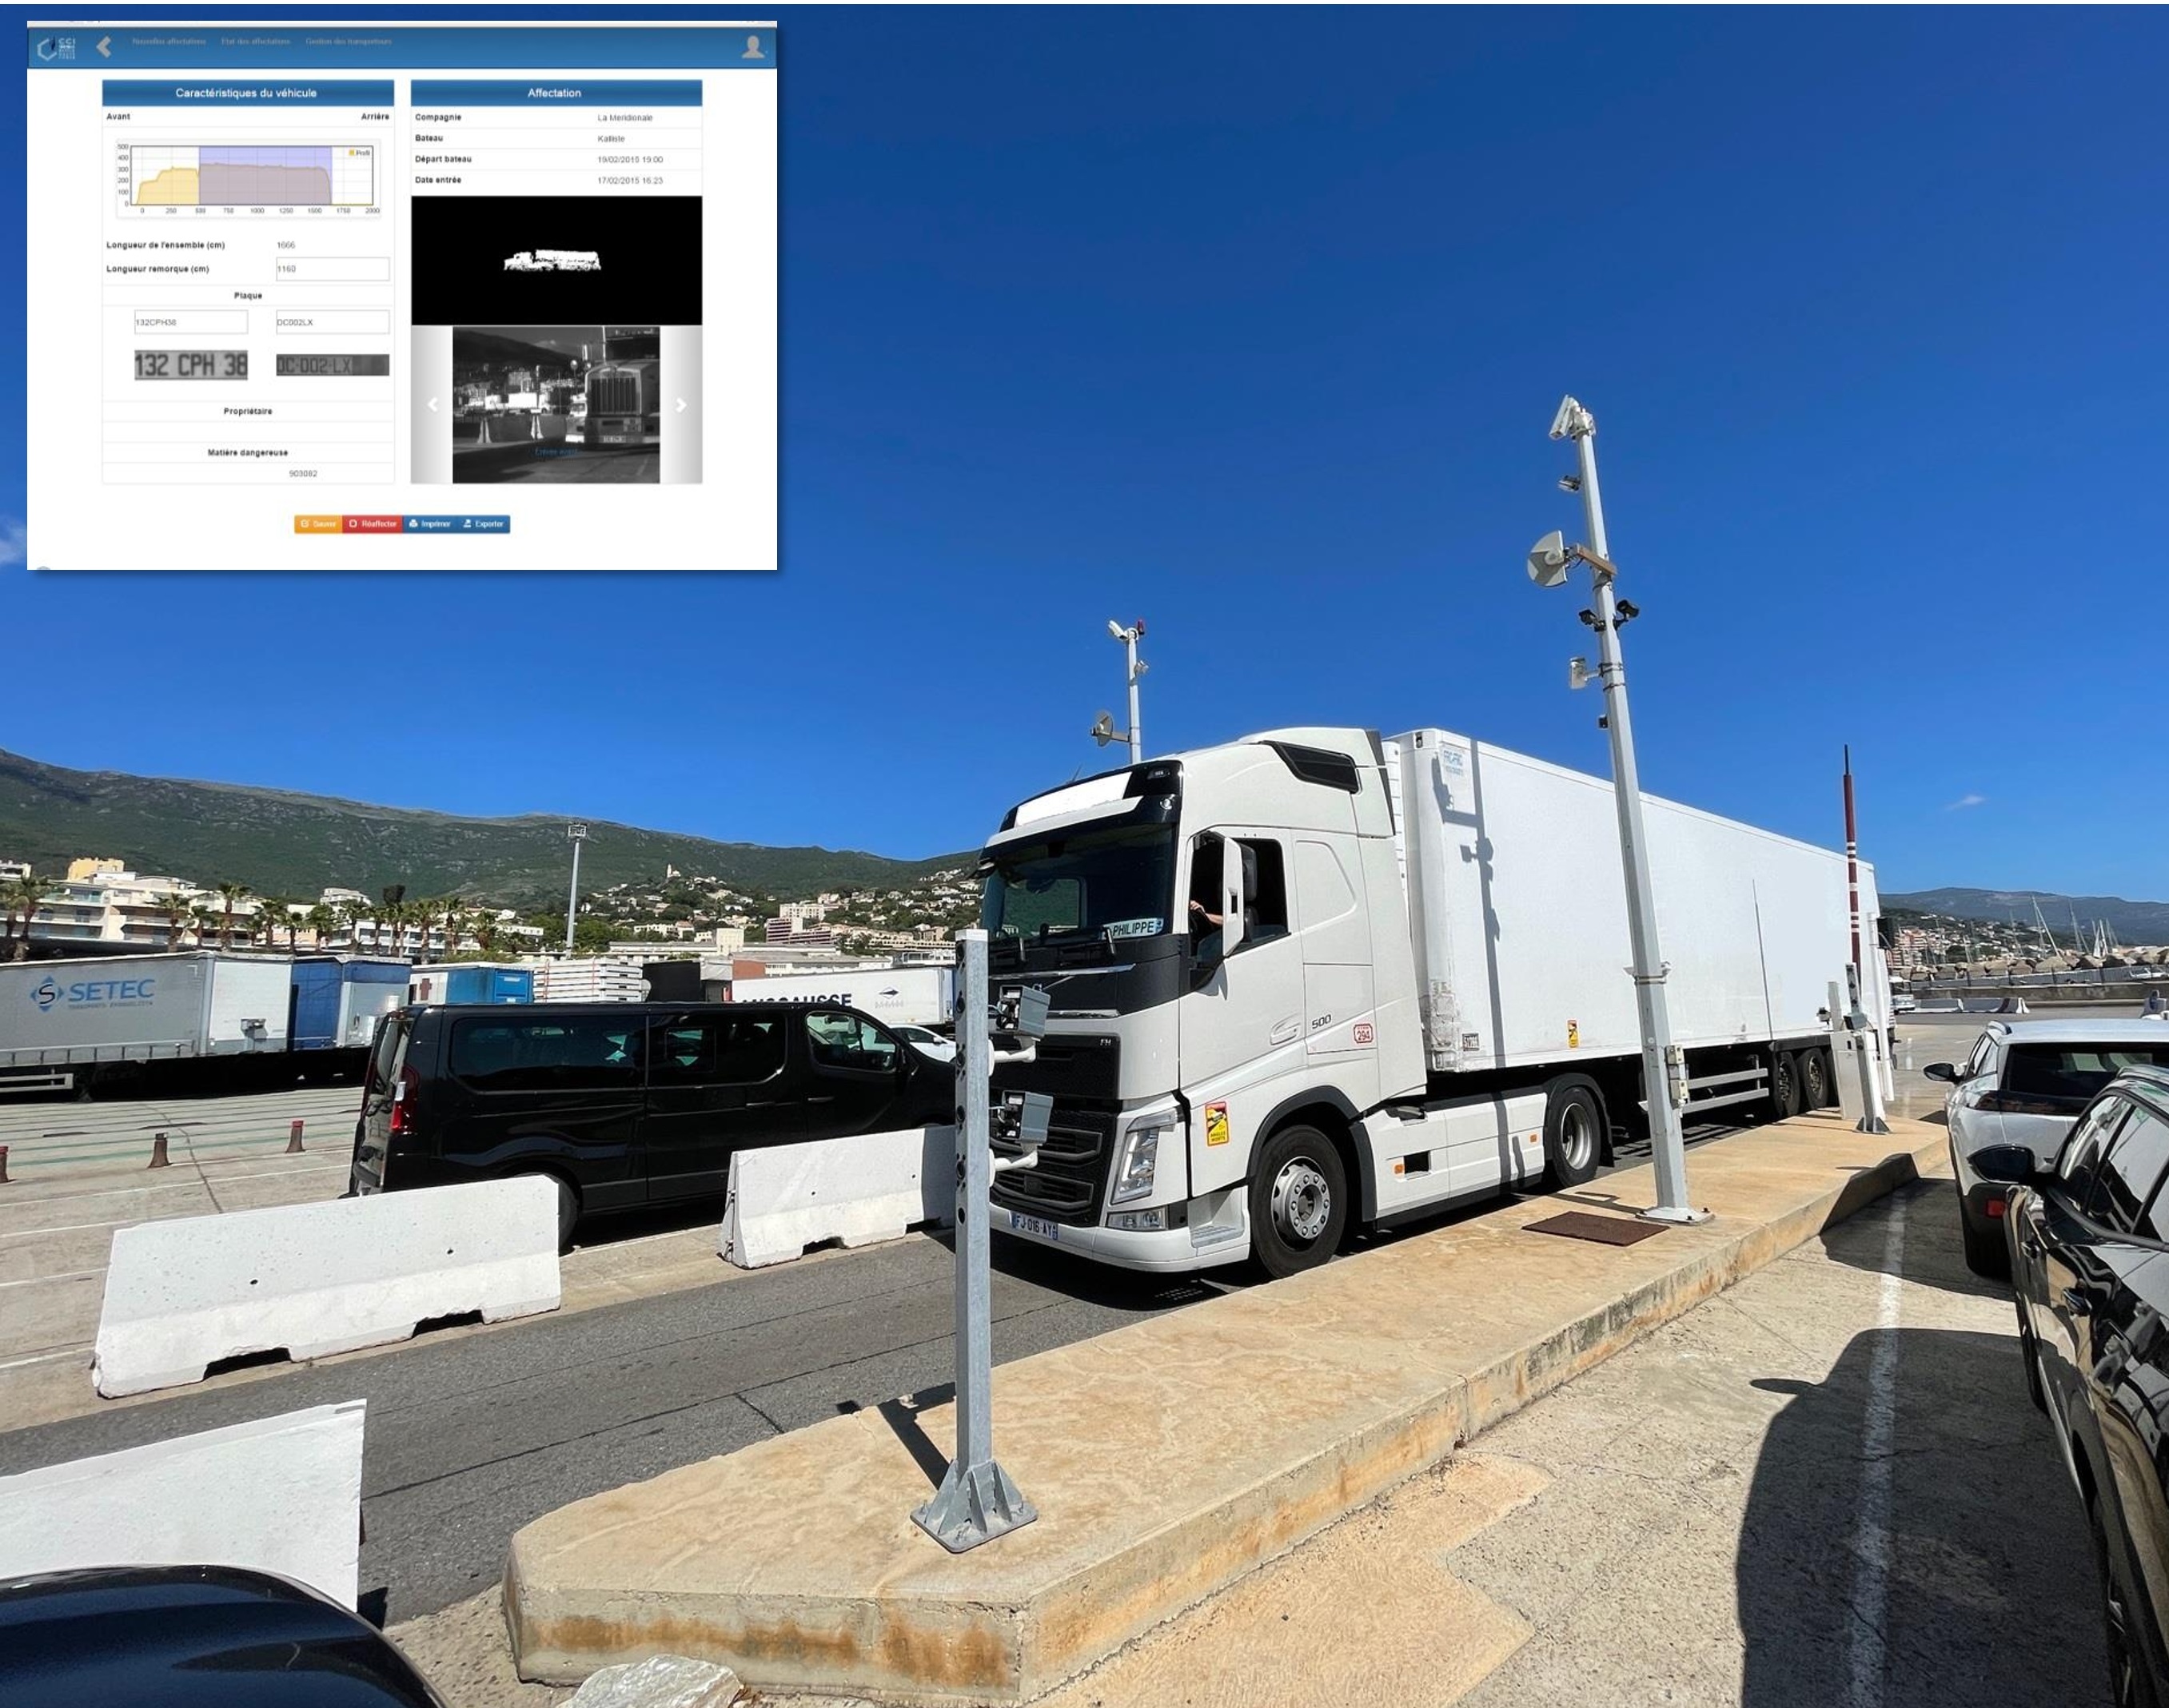 Le port de Bastia devient "un port intelligent"